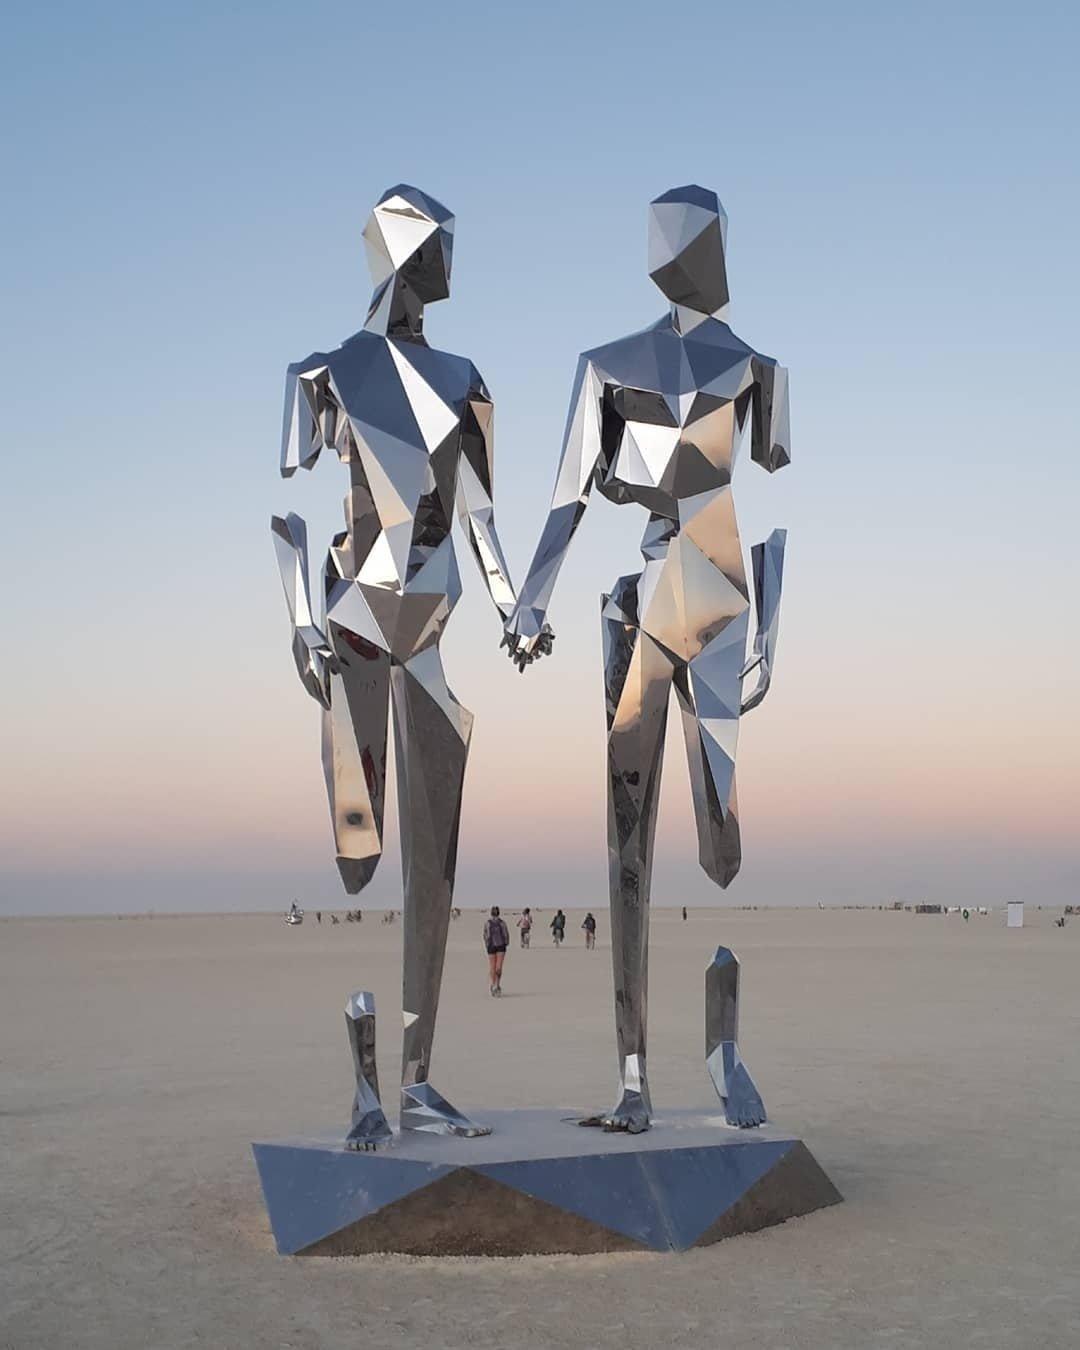 Мир фигур 63. Бёрнинг Мэн статуя. Скульптура Бернинг Мэн любовь. Статуя Бернинг Мэн 2022. Фестиваль Burning man статуи.